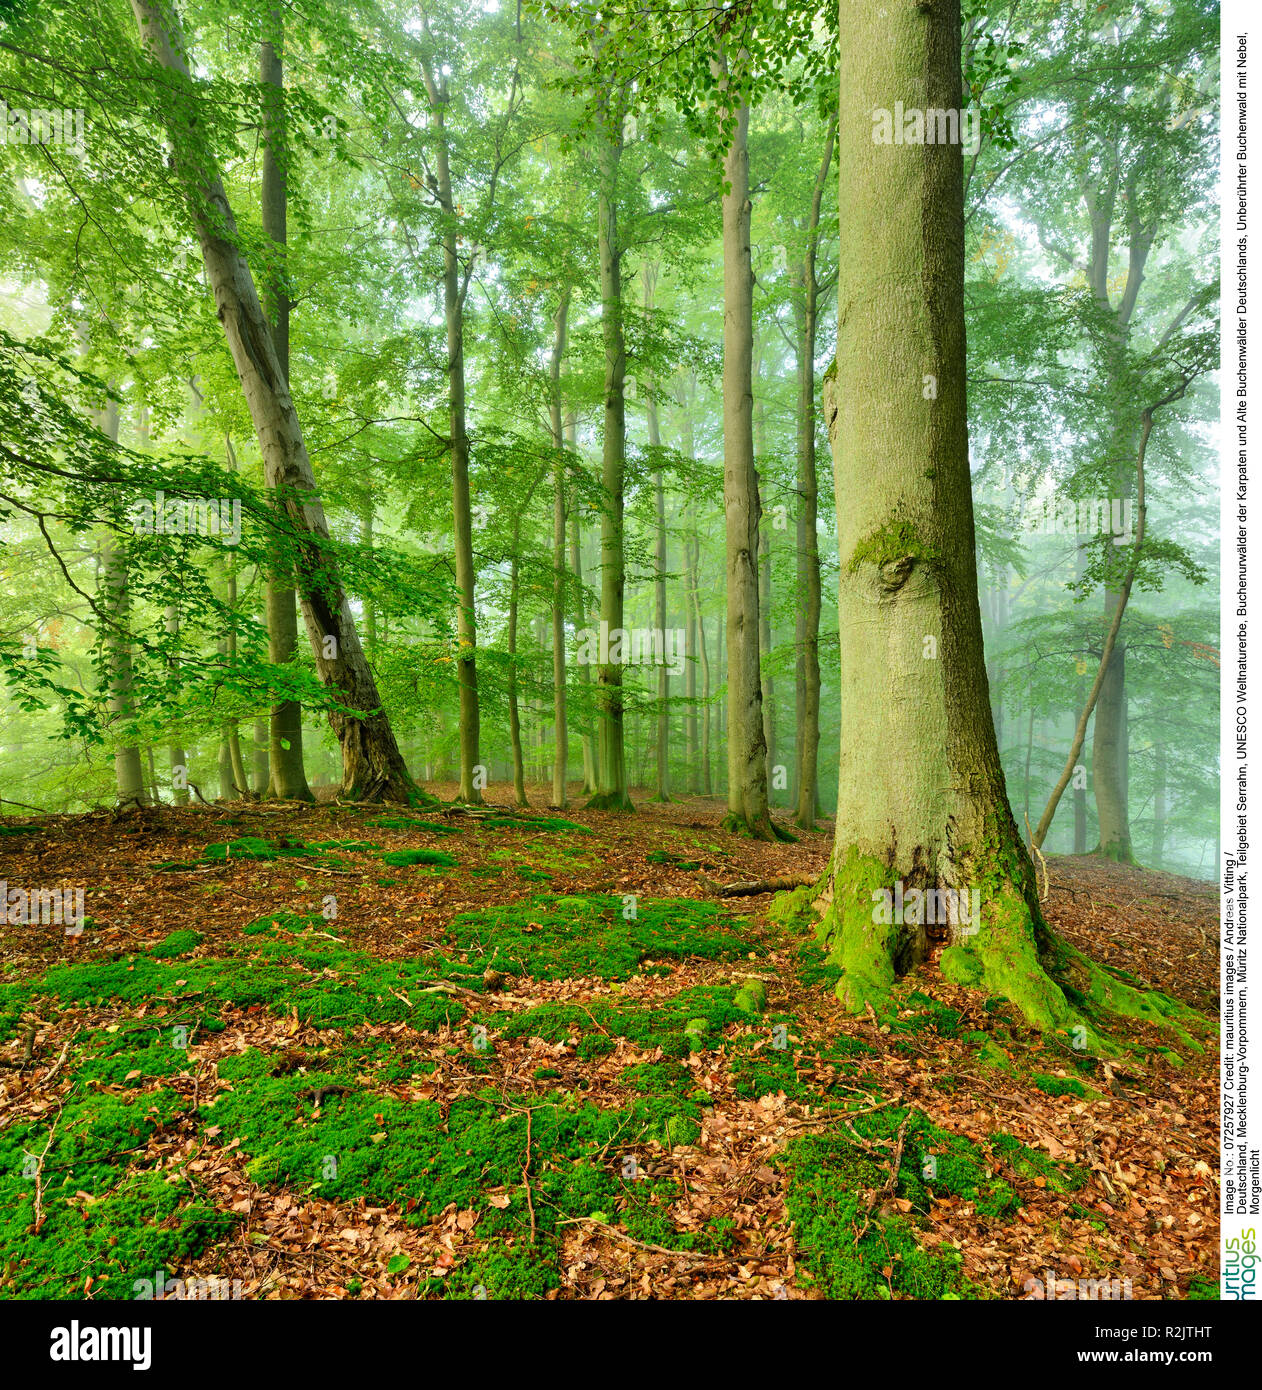 Germany, Mecklenburg-Vorpommern, Müritz National Park, subarea Serrahn, UNESCO World Natural Heritage, beech forests of the Carpathians and old beech forests in Germany, untouched beech forest with fog, morning light Stock Photo